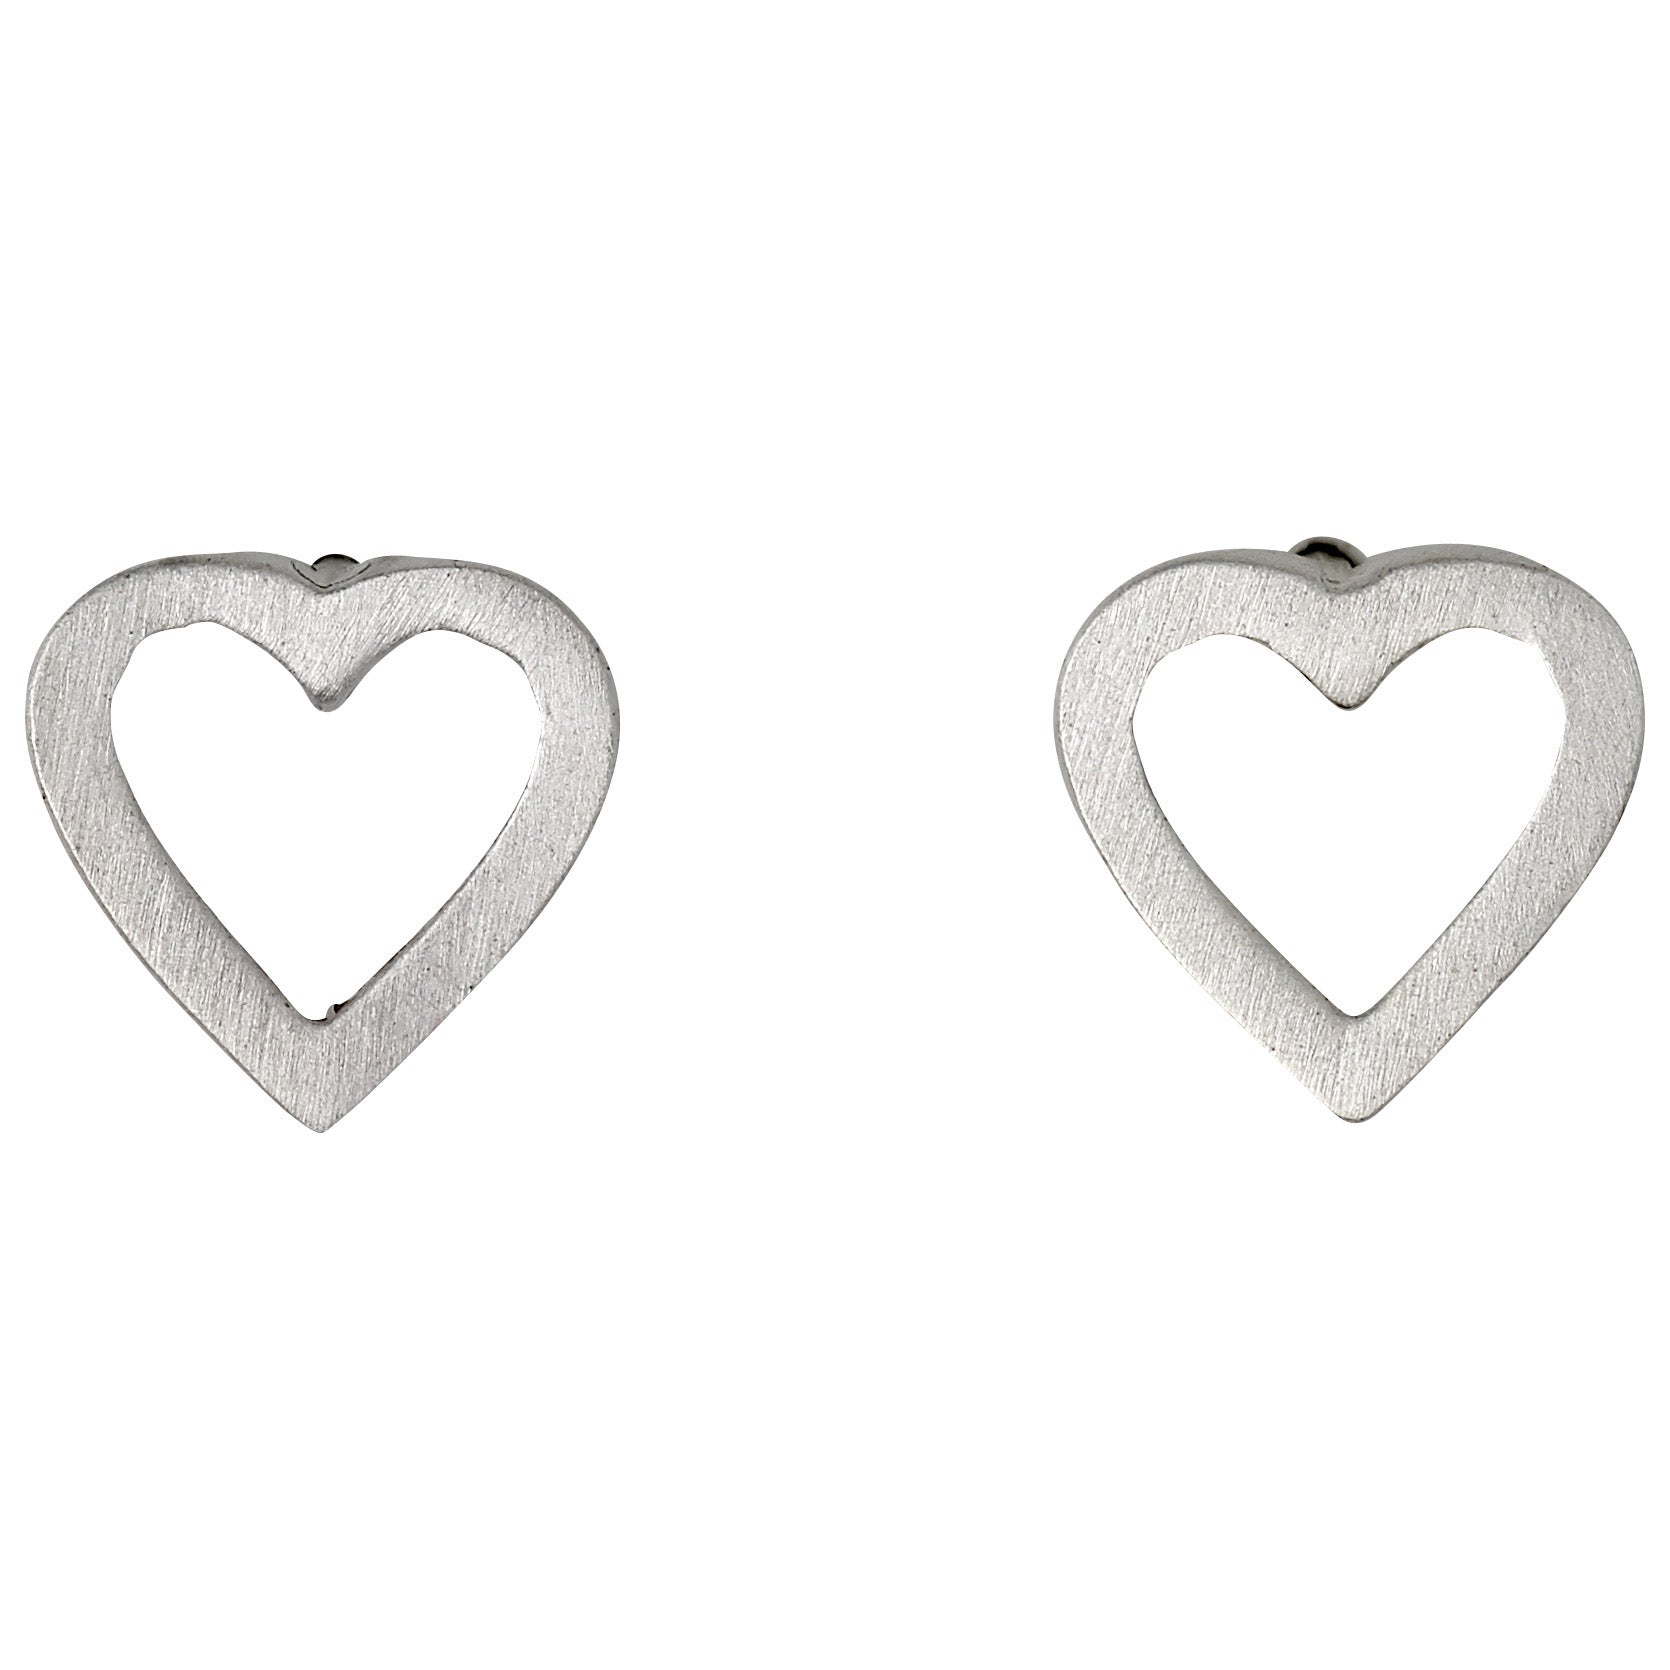 Billede af Pilgrim SOPHIA recycled mini hjerte ørestikker sølvbelagt hos Pilgrim